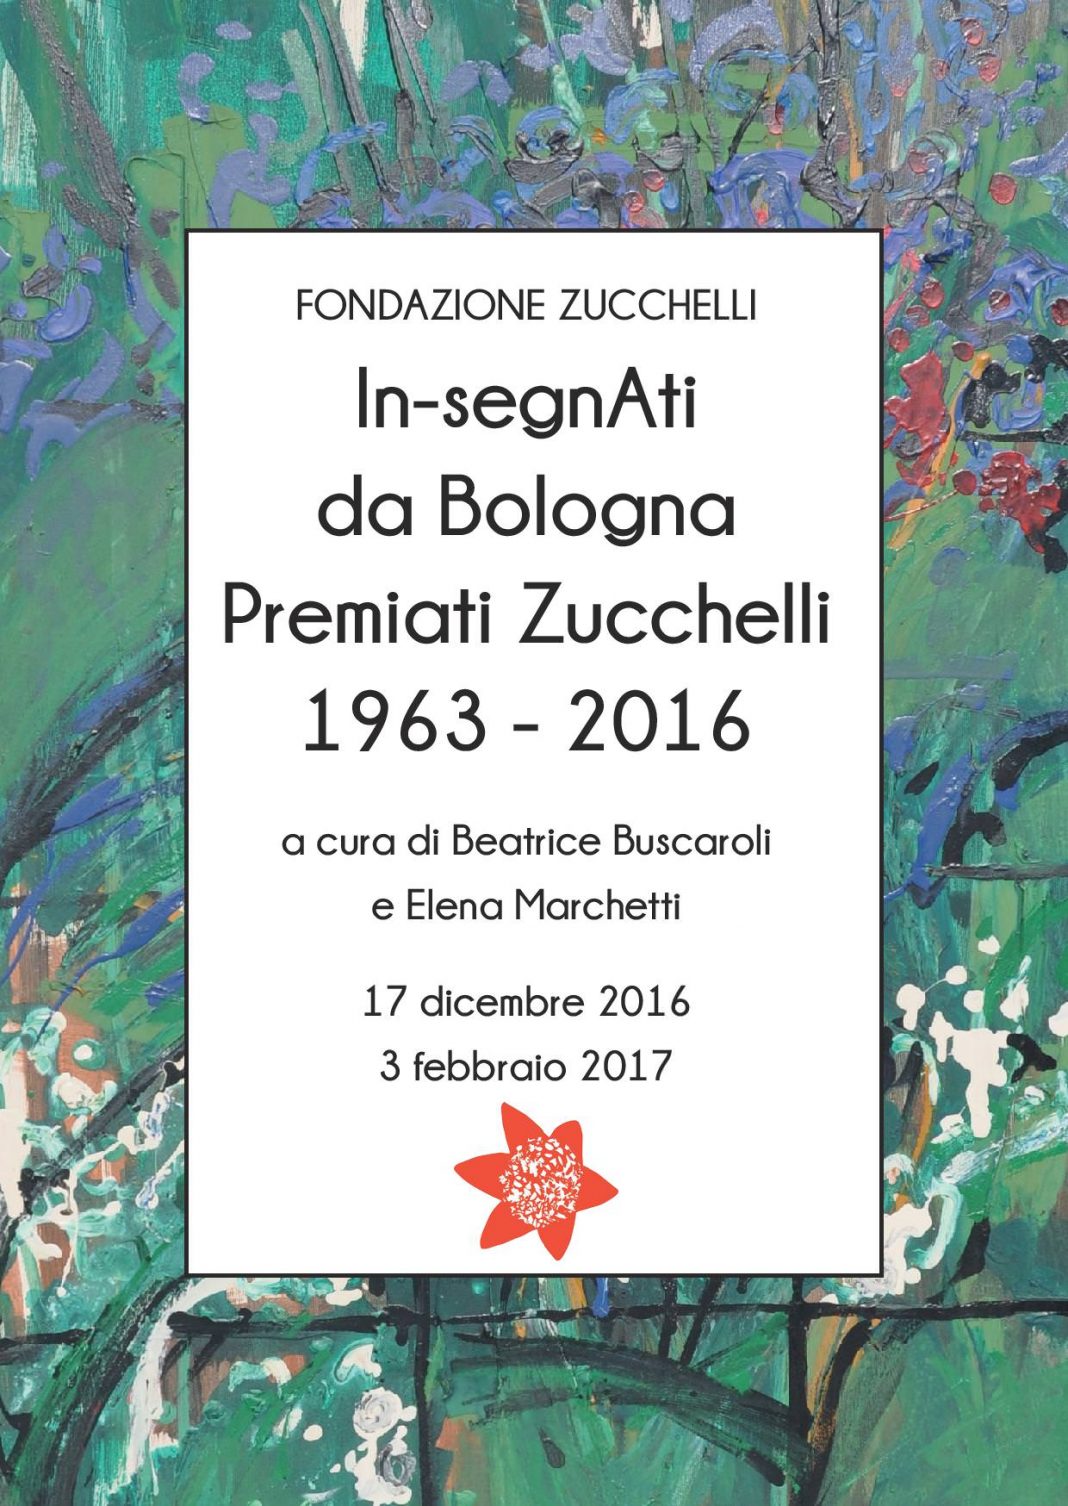 In-segnAti da Bologna. Premiati Zucchelli 1963 – 2016https://www.exibart.com/repository/media/eventi/2016/12/in-segnati-da-bologna.-premiati-zucchelli-1963-–-2016-1068x1506.jpg